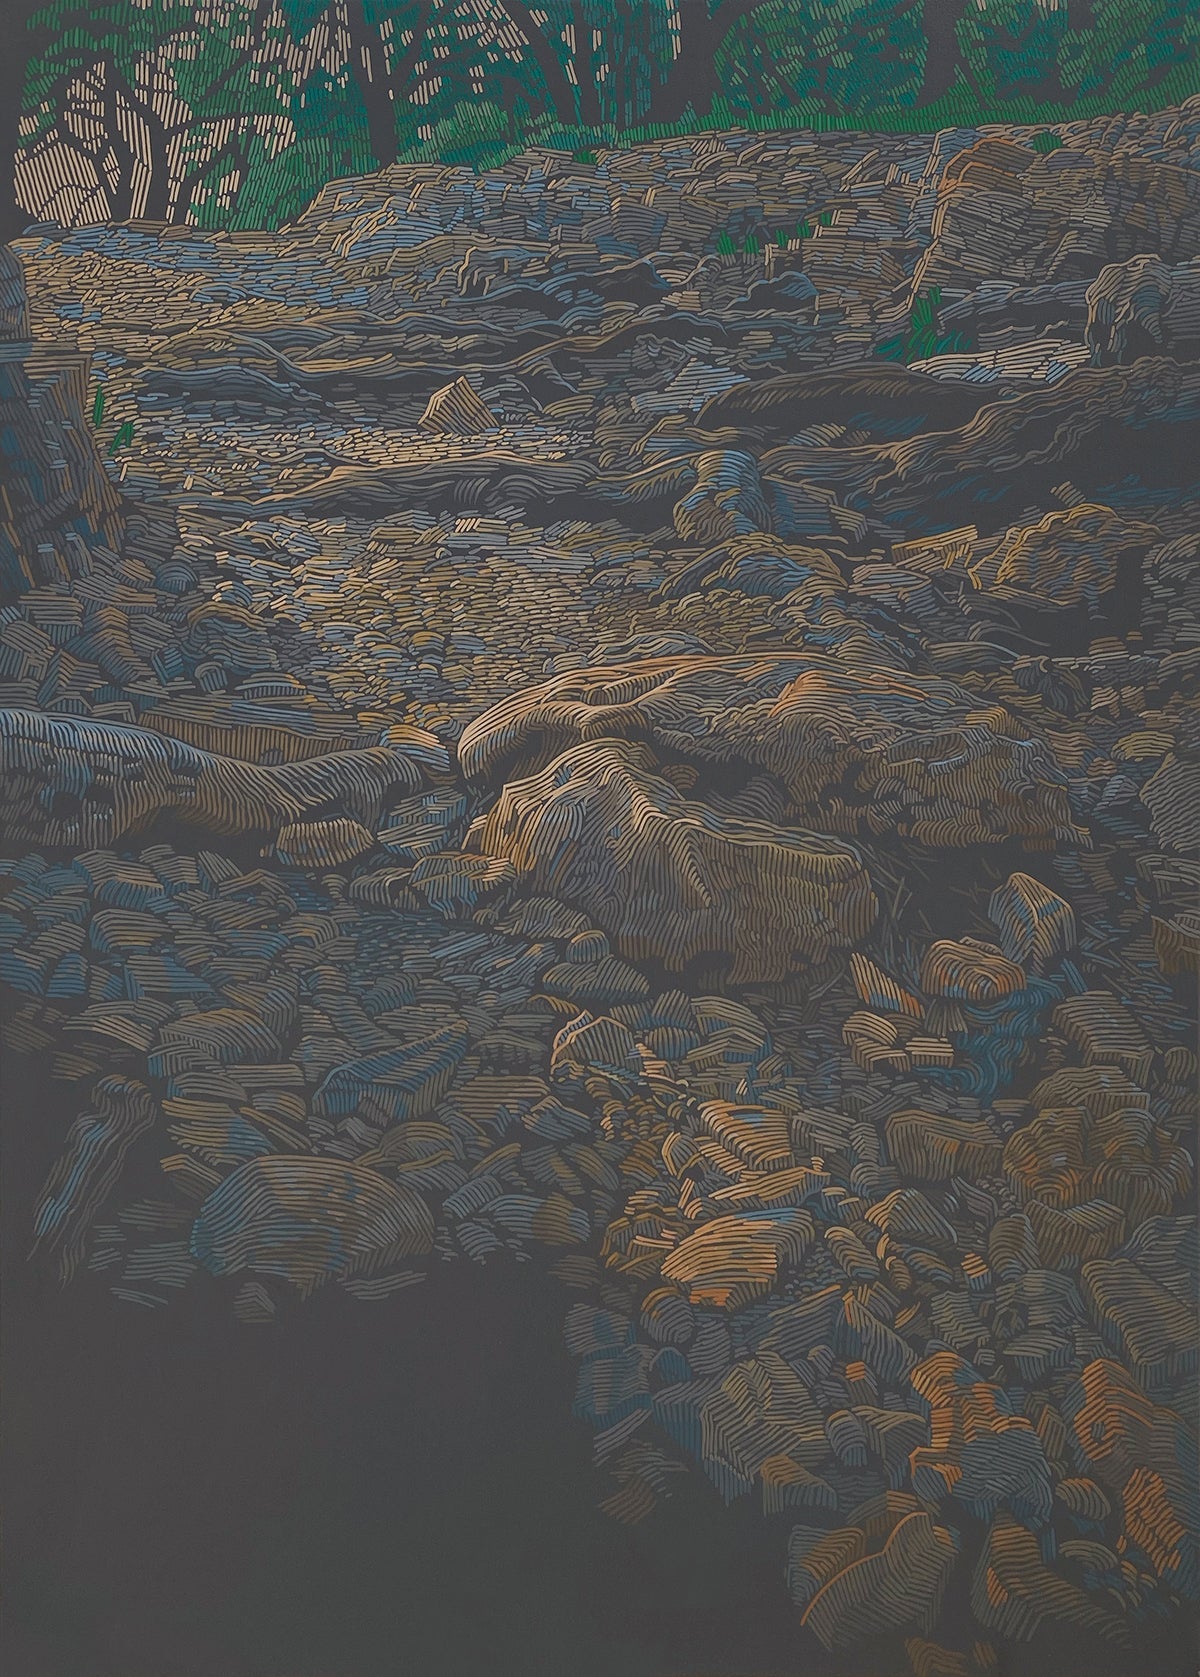 Felsenküste No.7, Leinwanddruck, 40x30 cm, 80x60 cm, 100x75 cm, 120x90 cm